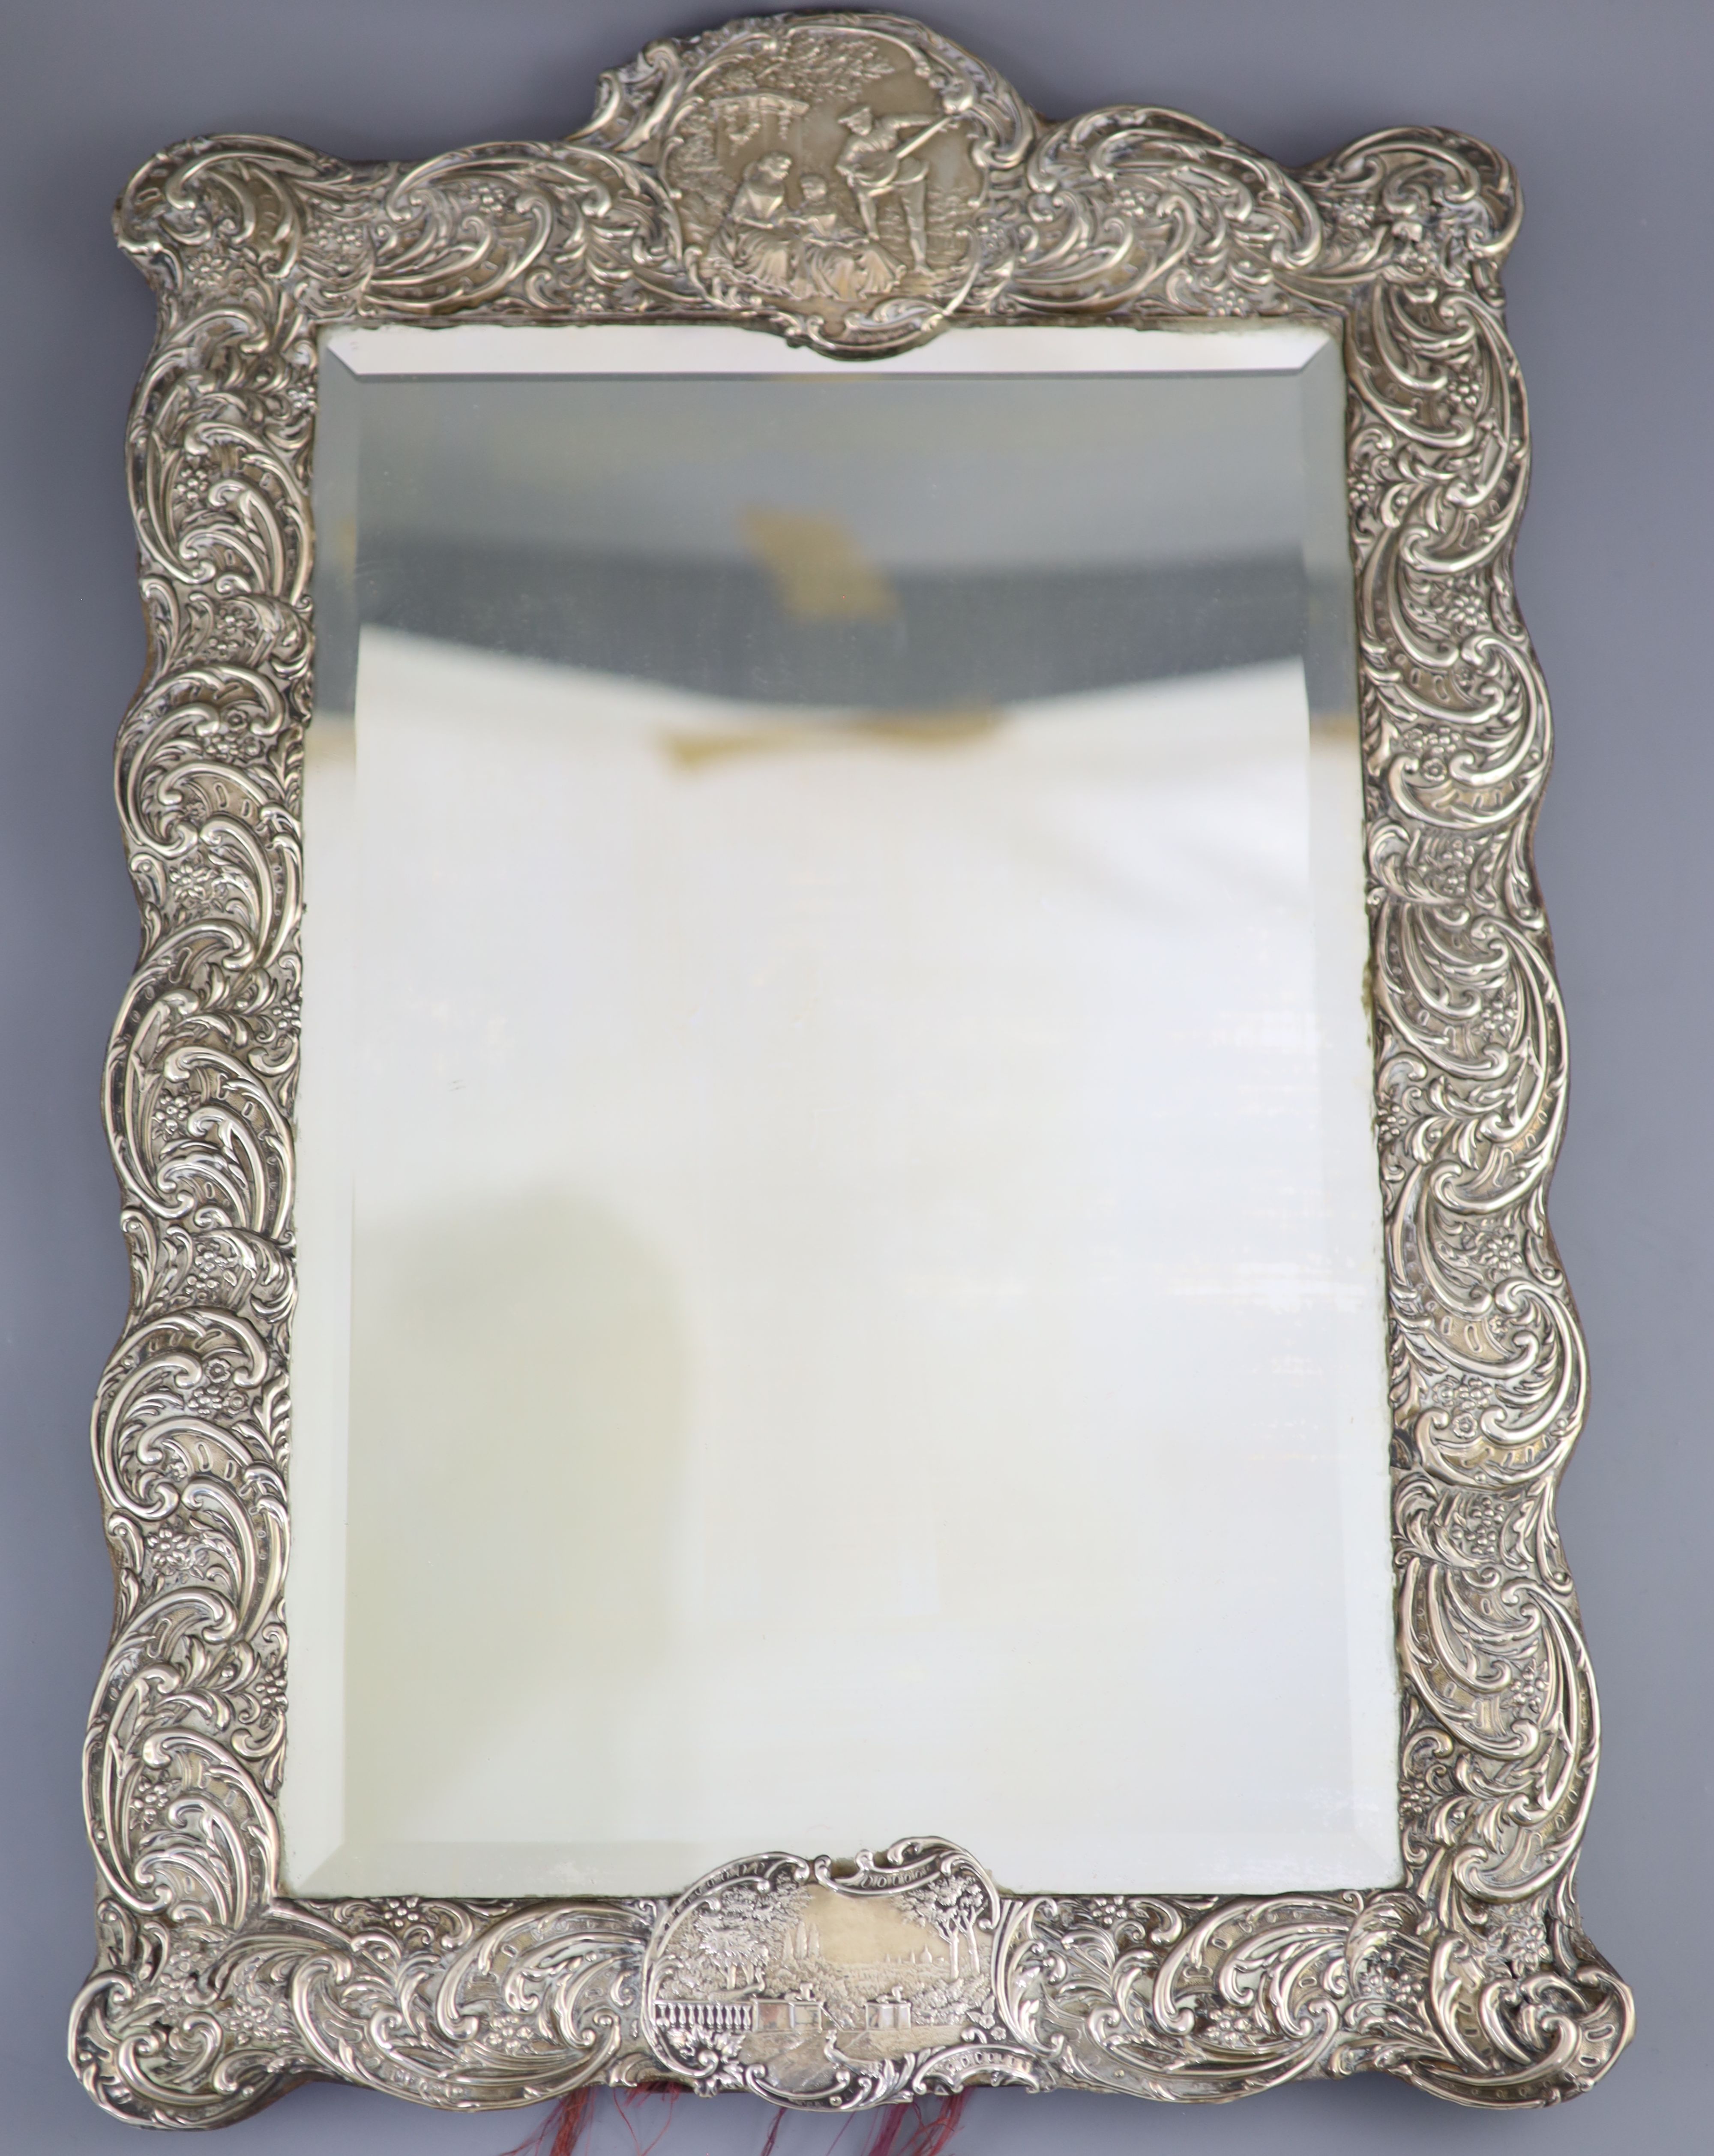 An Edwardian repousse silver mounted toilet mirror, Henry Matthews, Birmingham, circa, 1905,